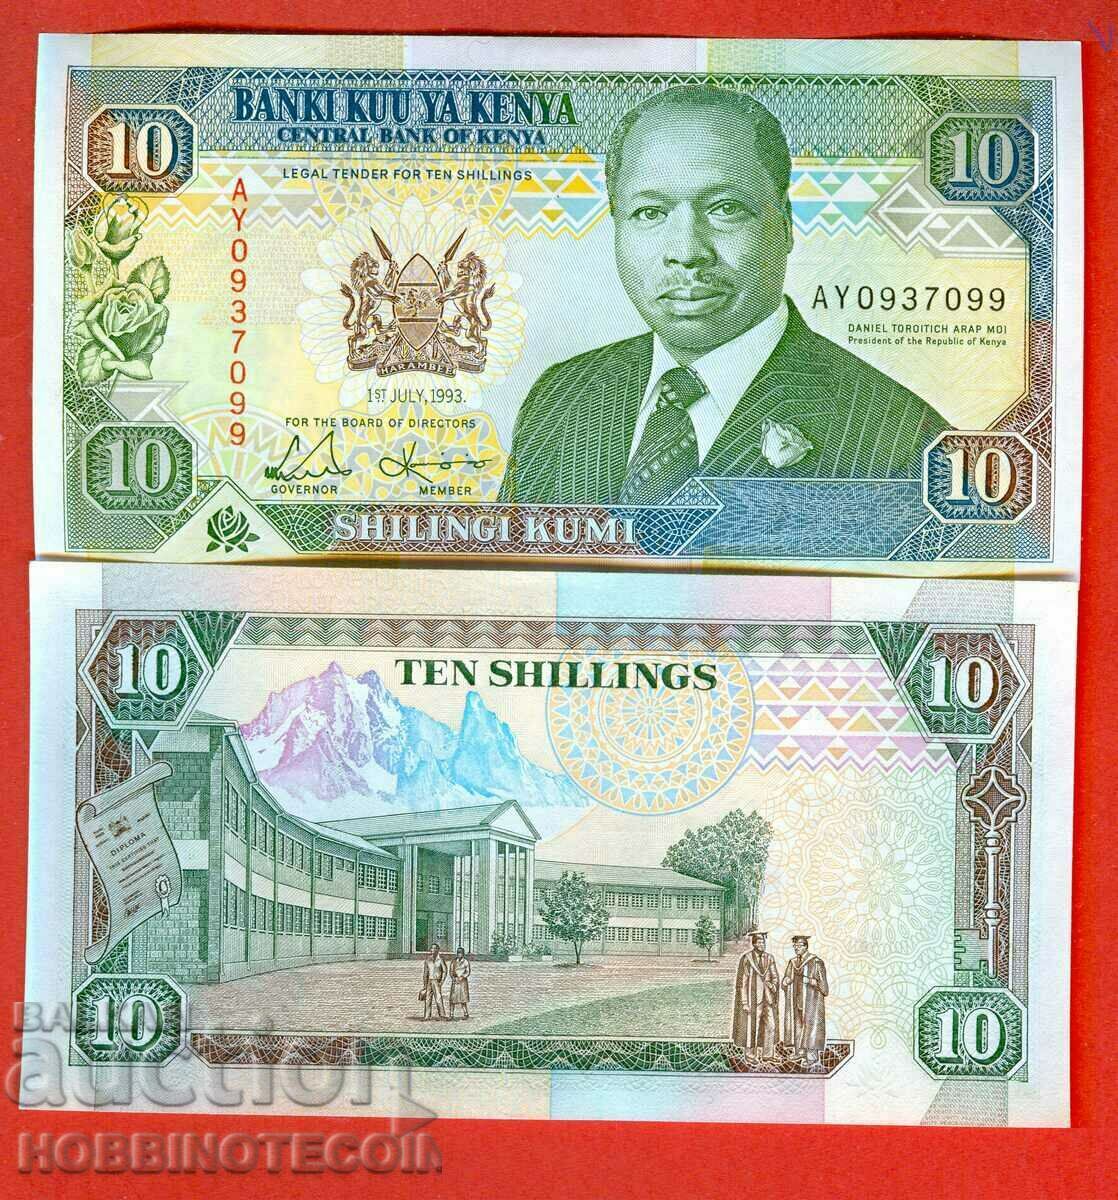 KENYA KENYA 10 Shilling emisiune - numărul 1993 NOU UNC